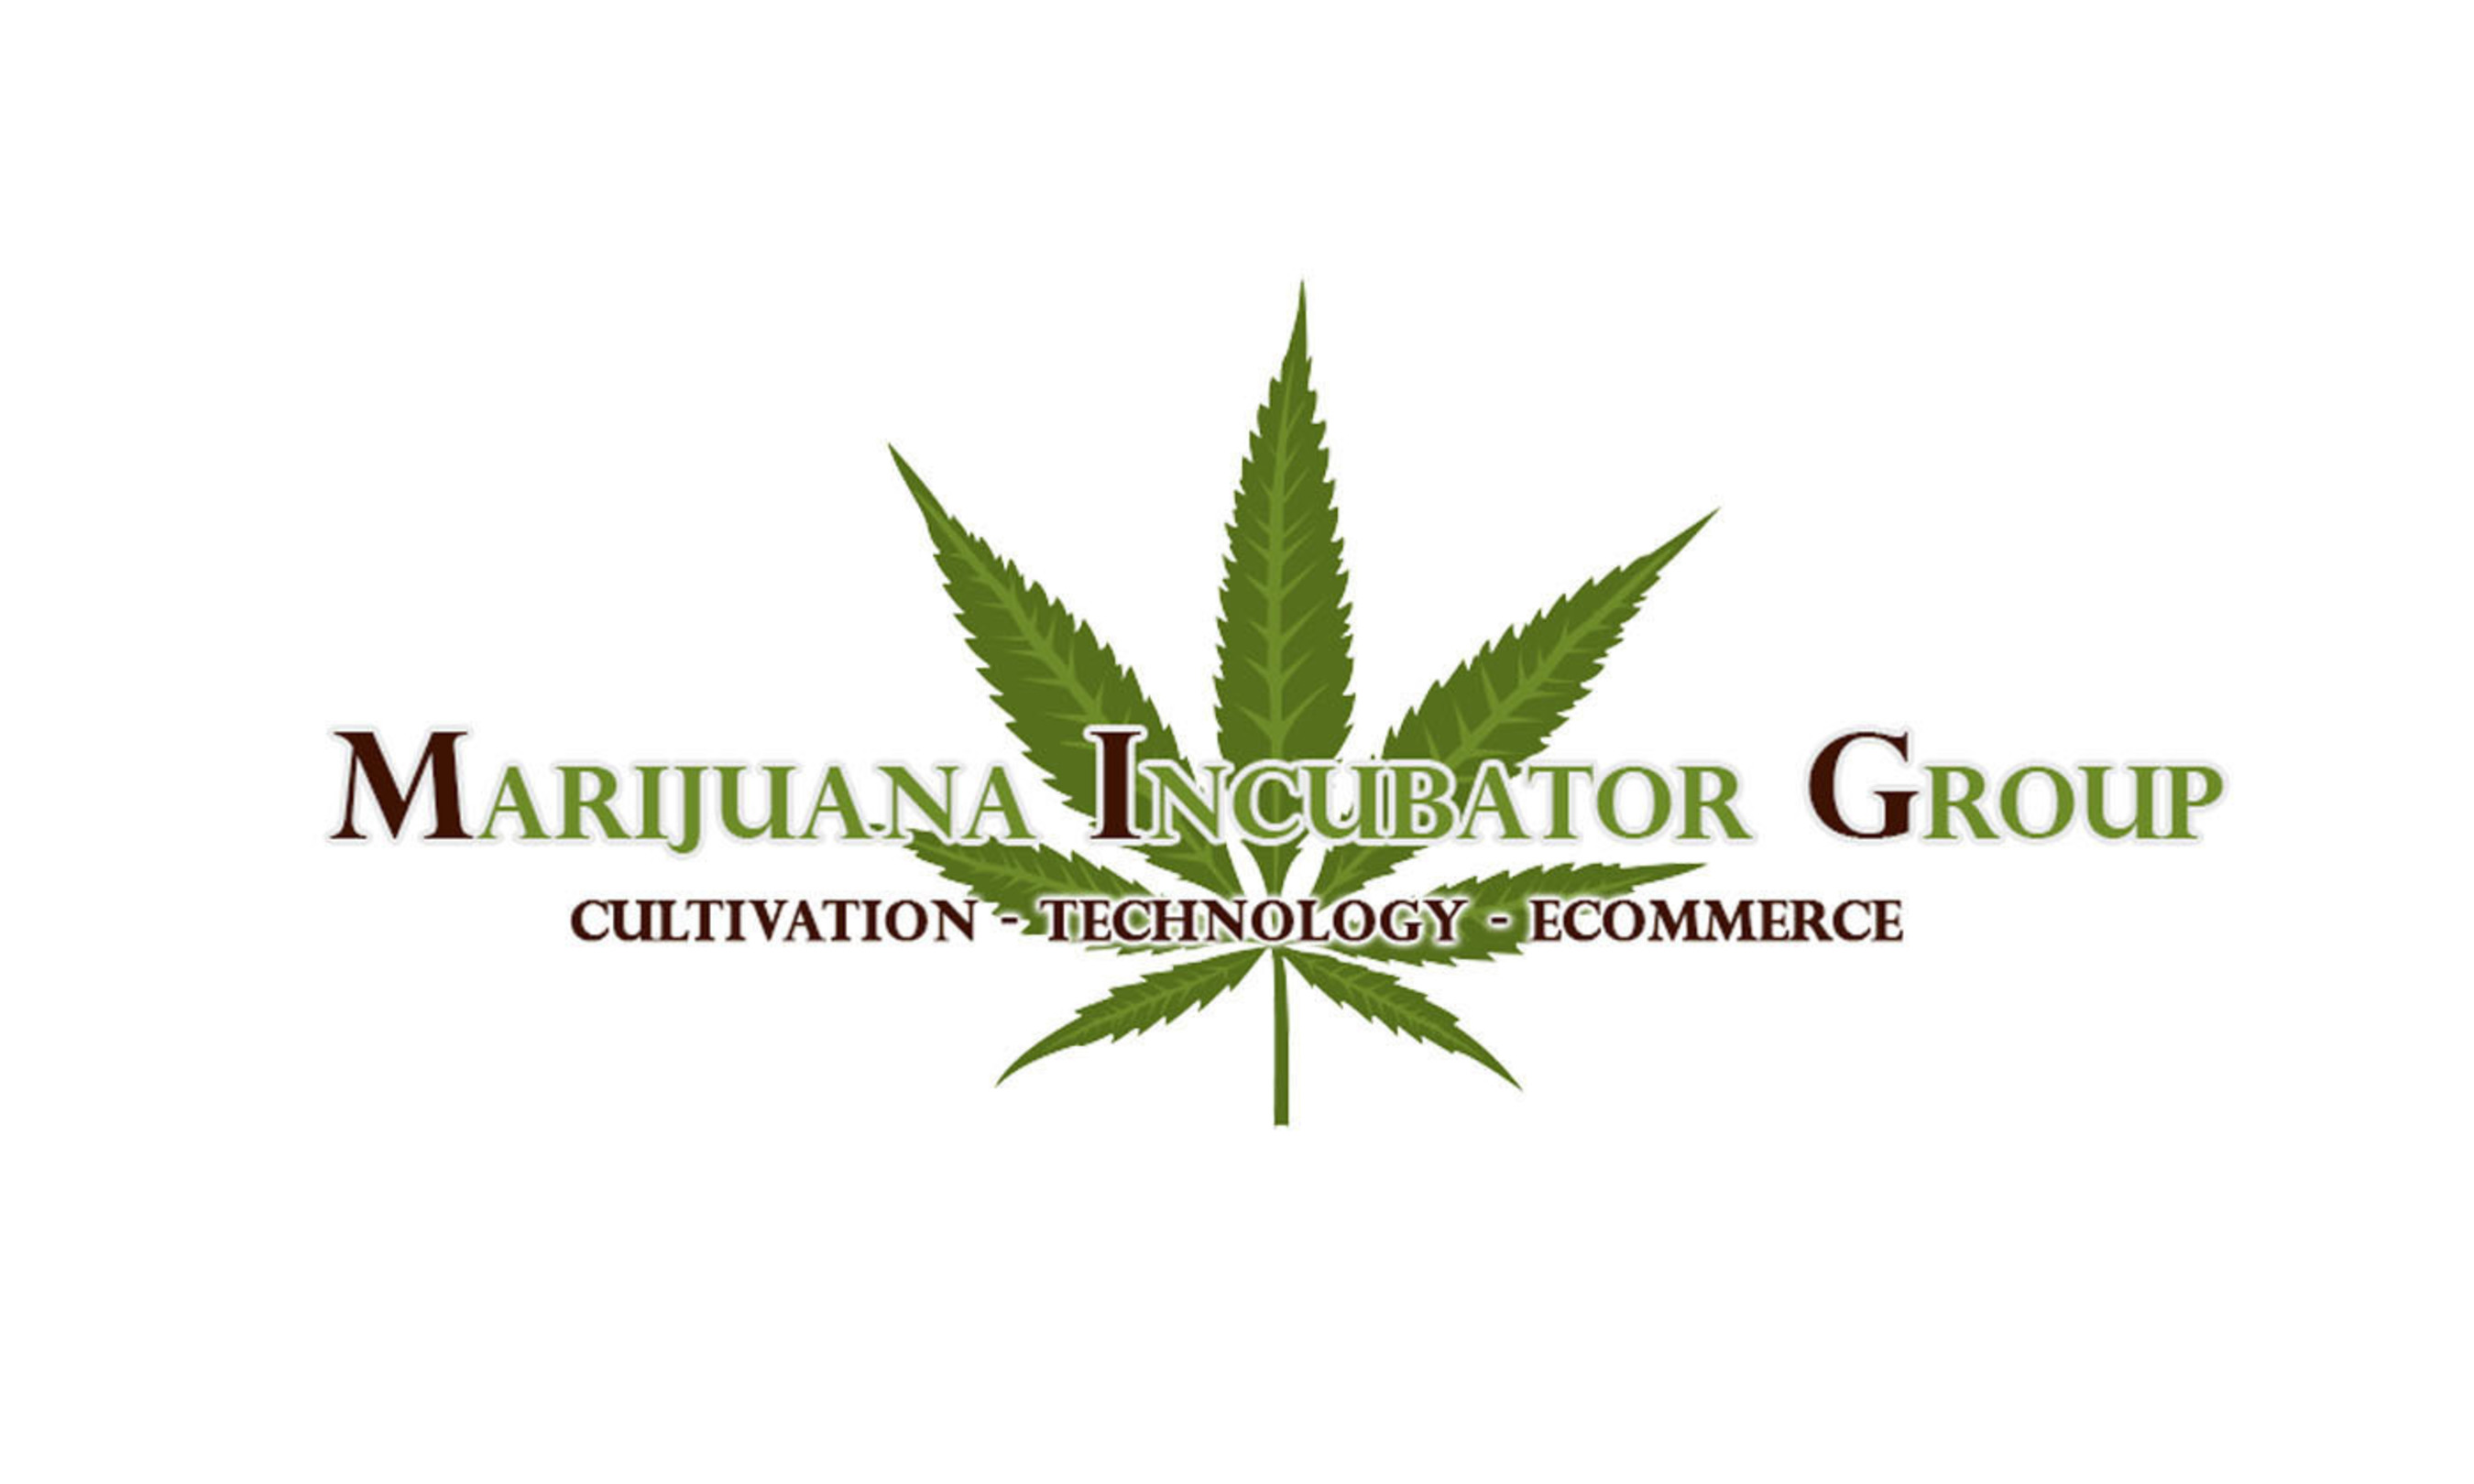 Marijuana Incubator Group, Inc. (PRNewsFoto/AV1 Group, Inc.) (PRNewsFoto/AV1 GROUP, INC.)